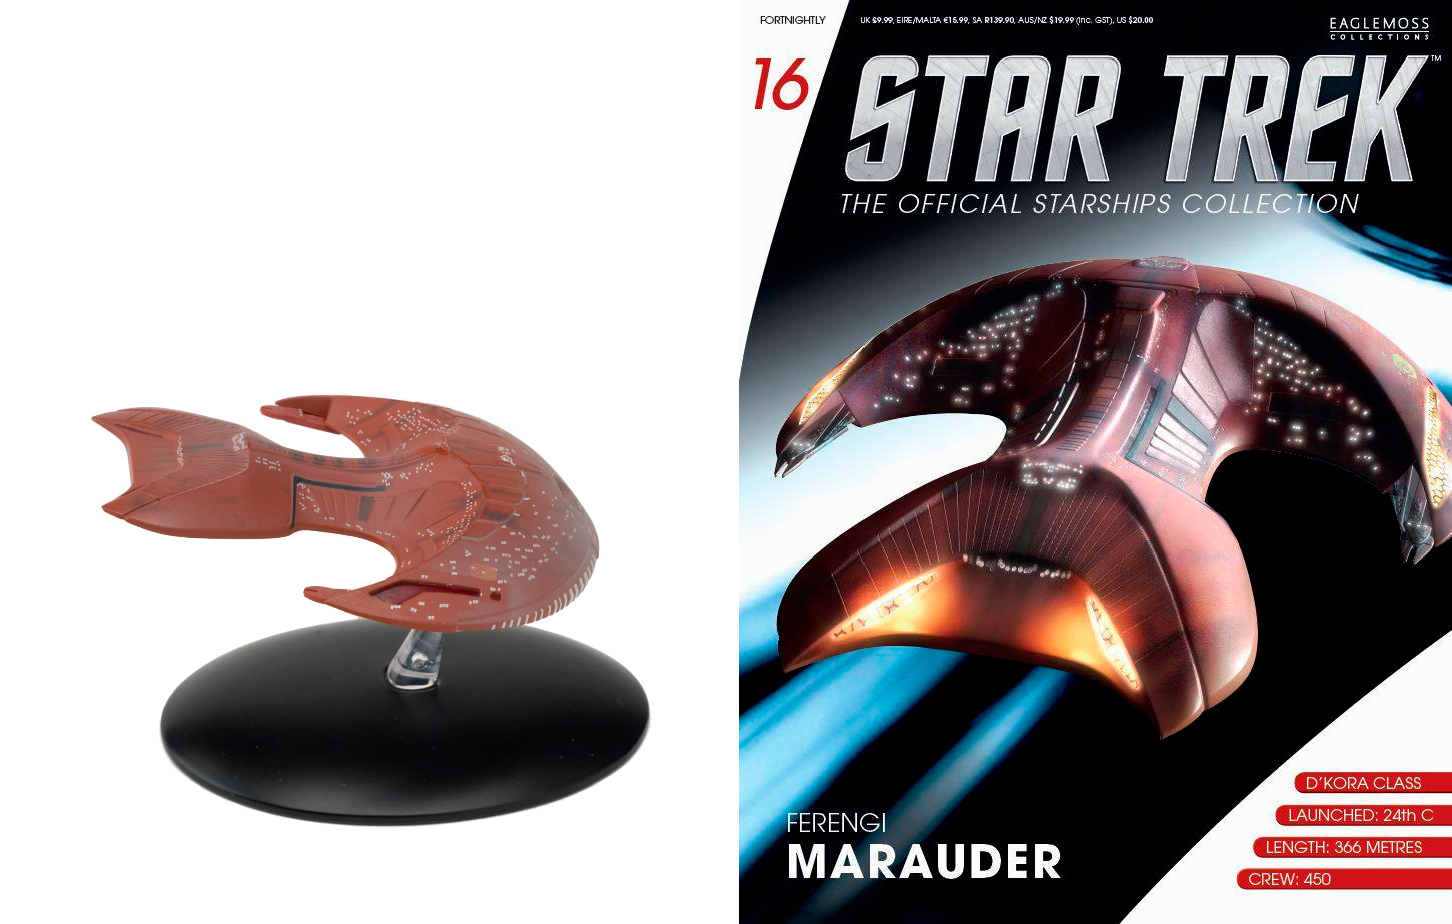 Eaglemoss Star Trek Official Starships Collection Issue # 9 Model and Magazine 